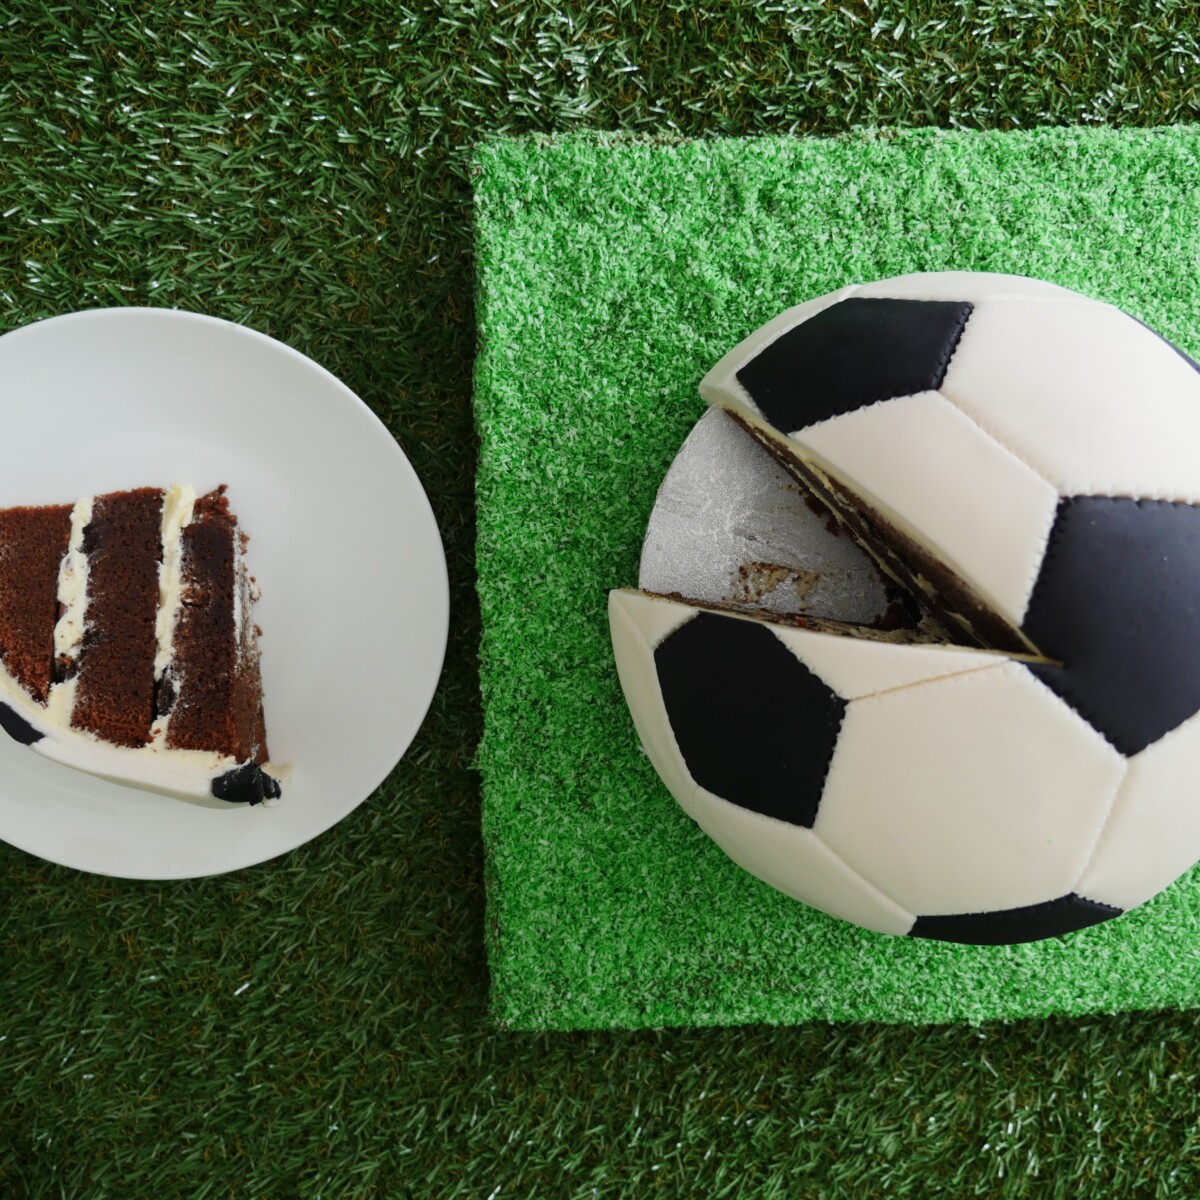 Best Football Cake Recipe - How To Make Football Cake